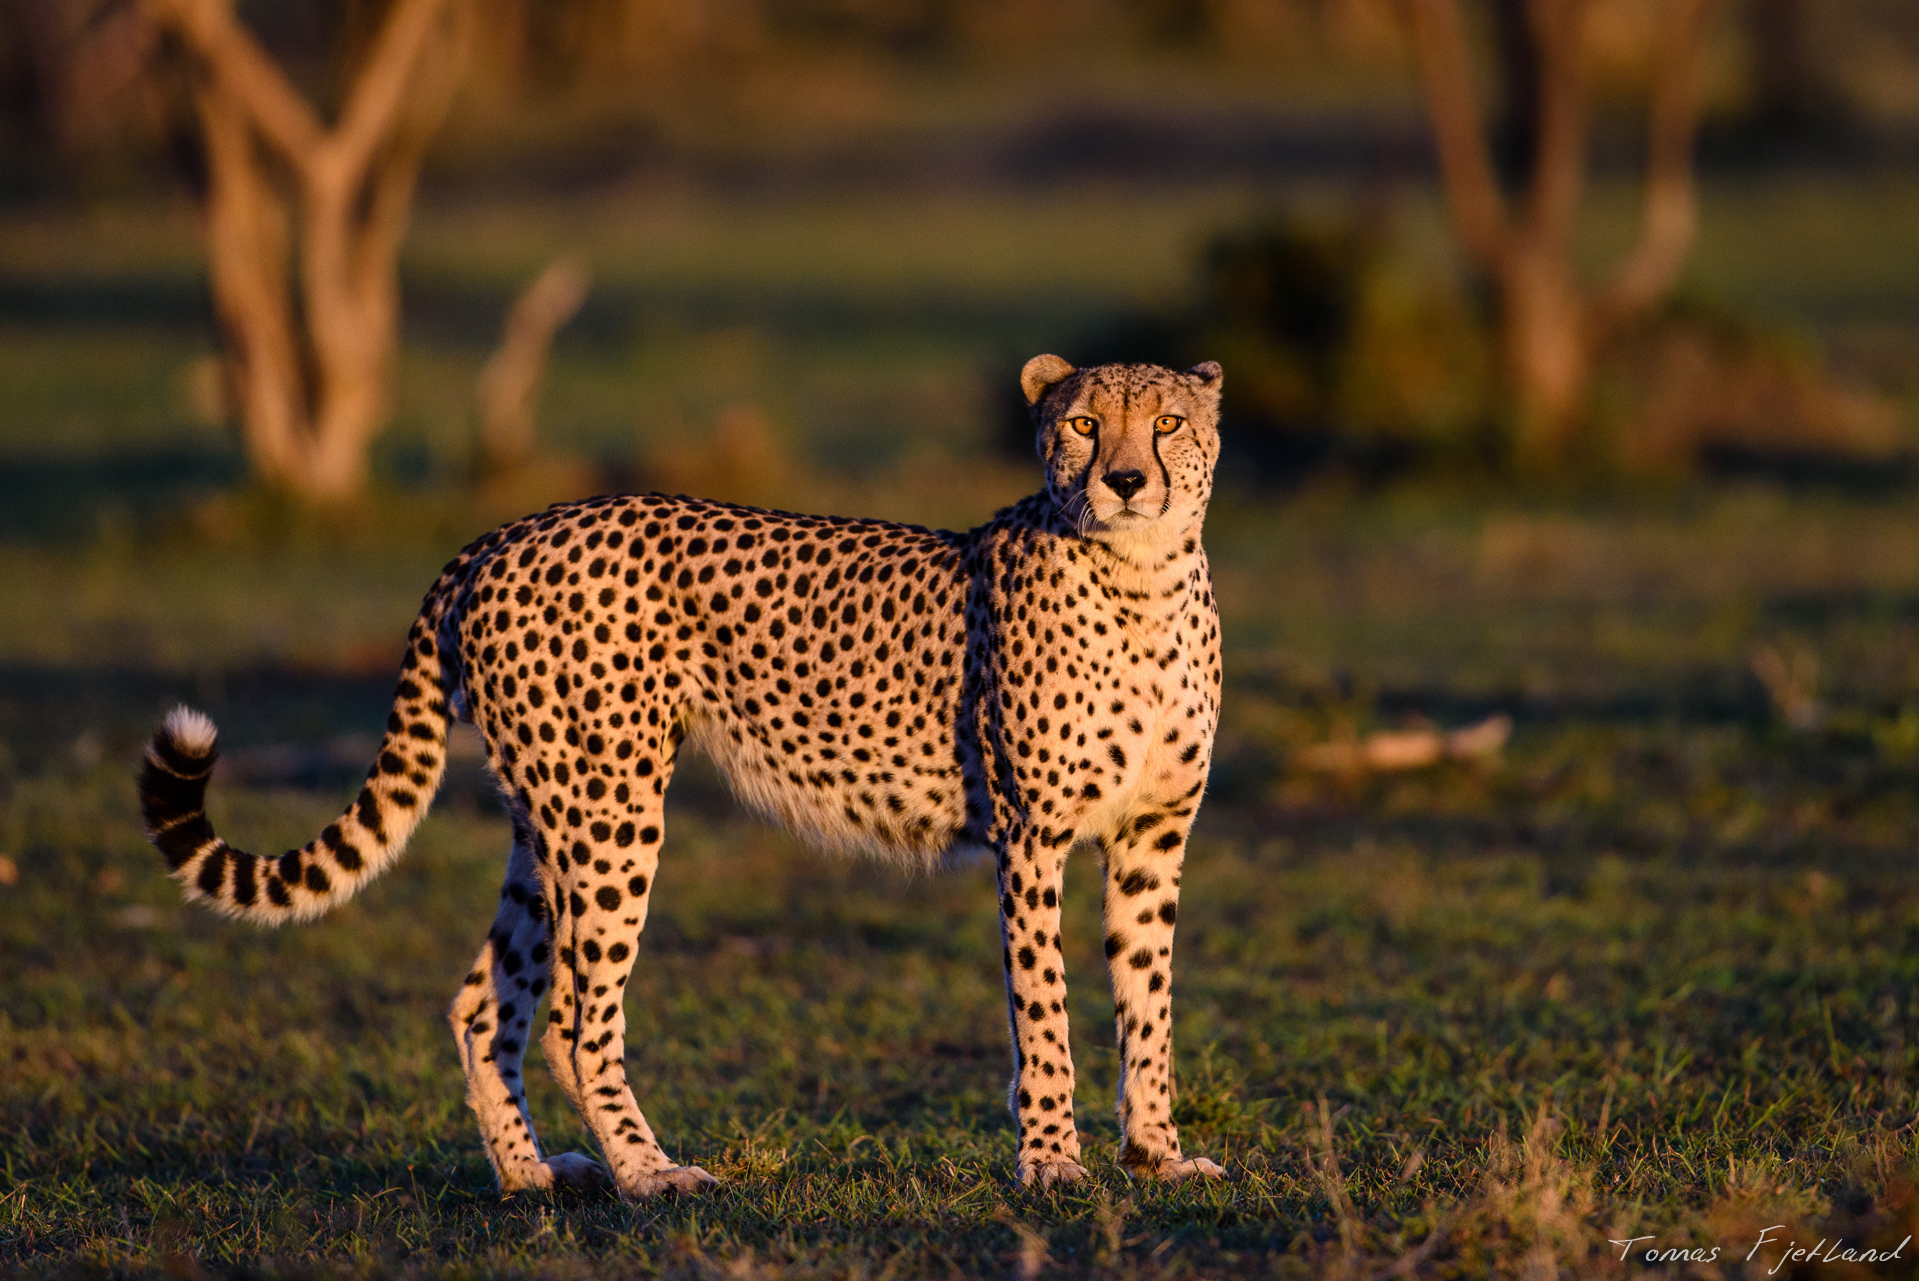 Cheetah posing in the warm sunset light